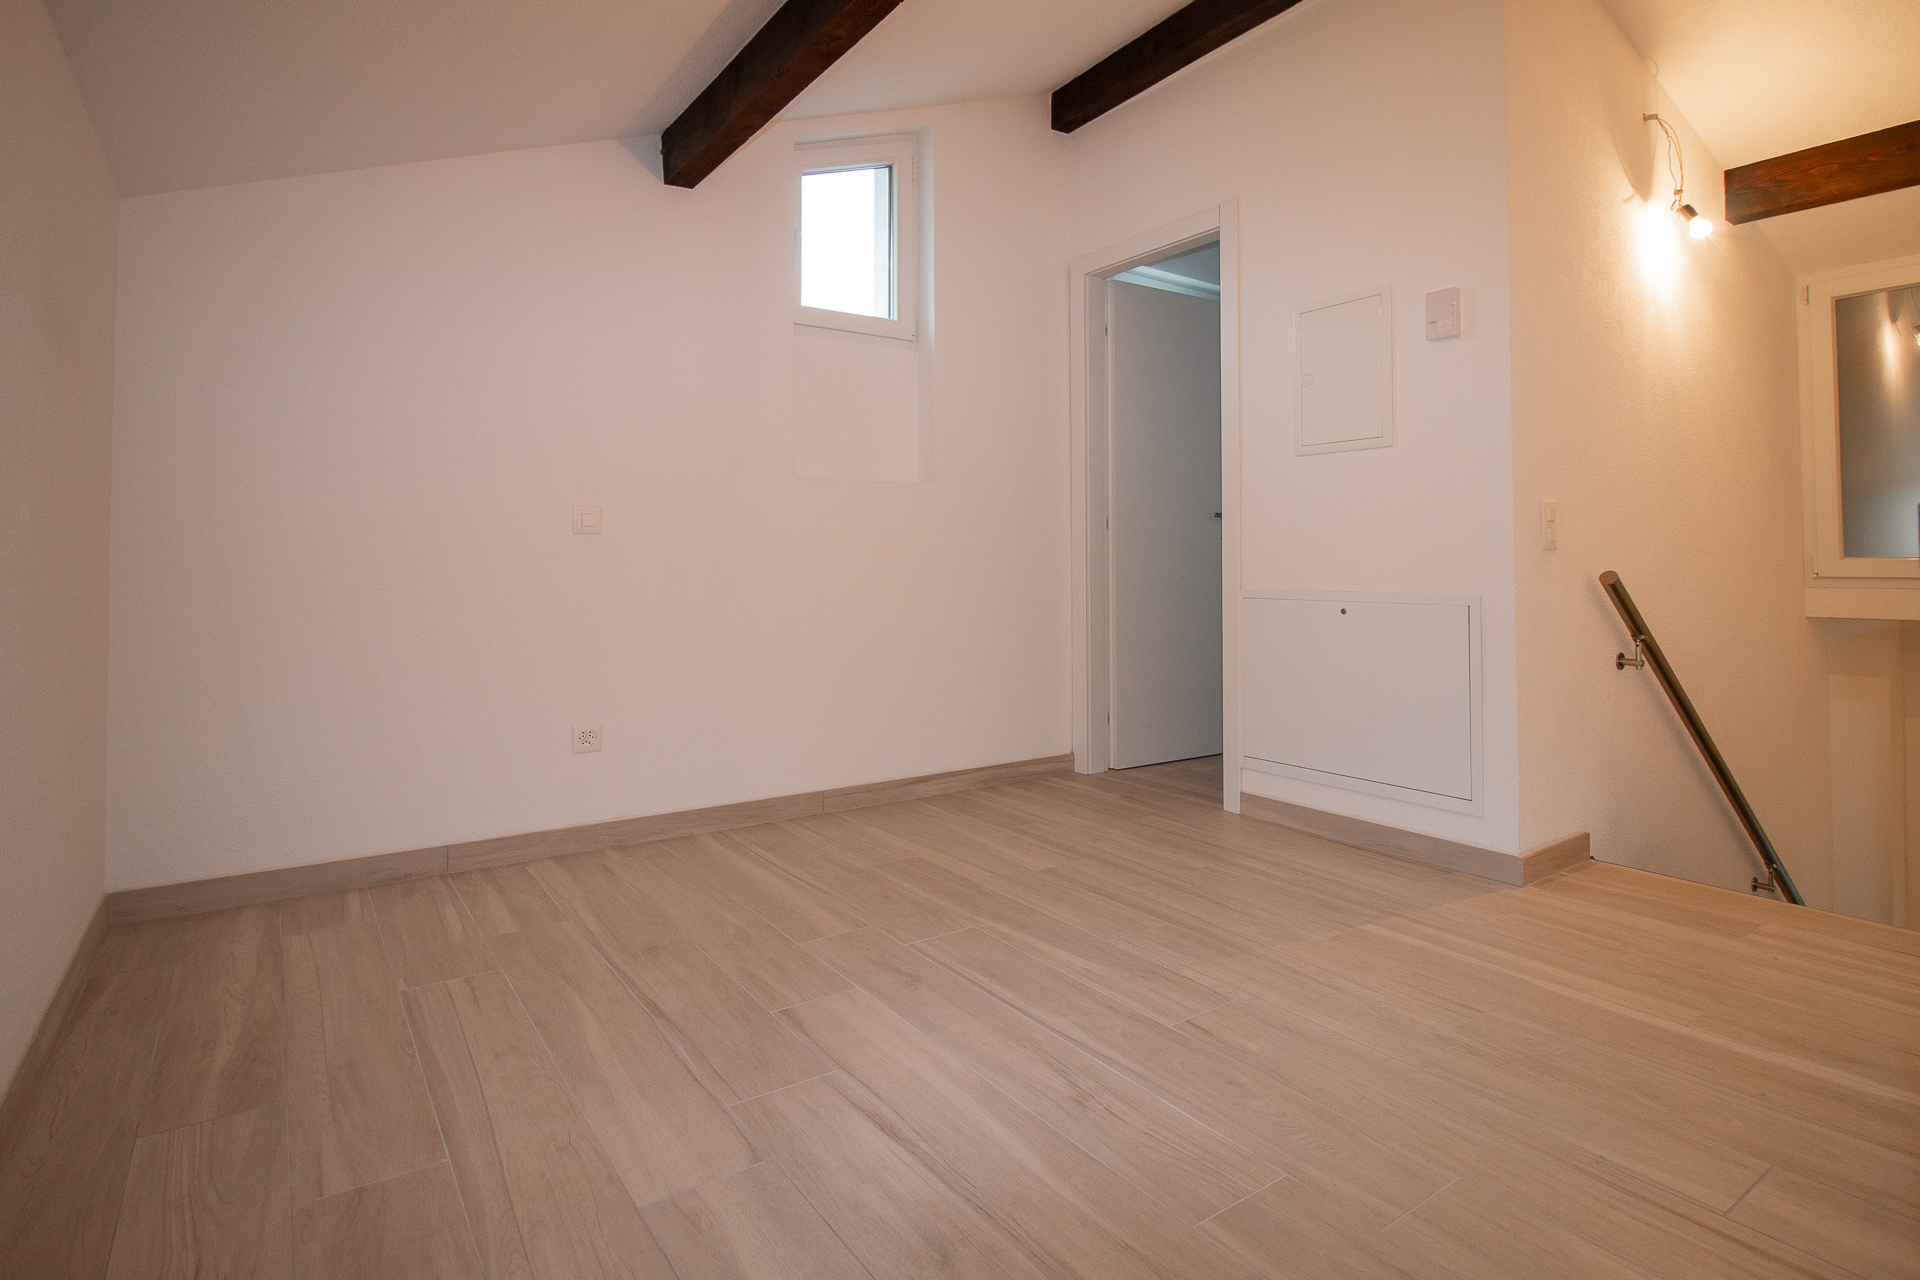 Studio apartment for use as tourist accommodation in Ponte Tresa